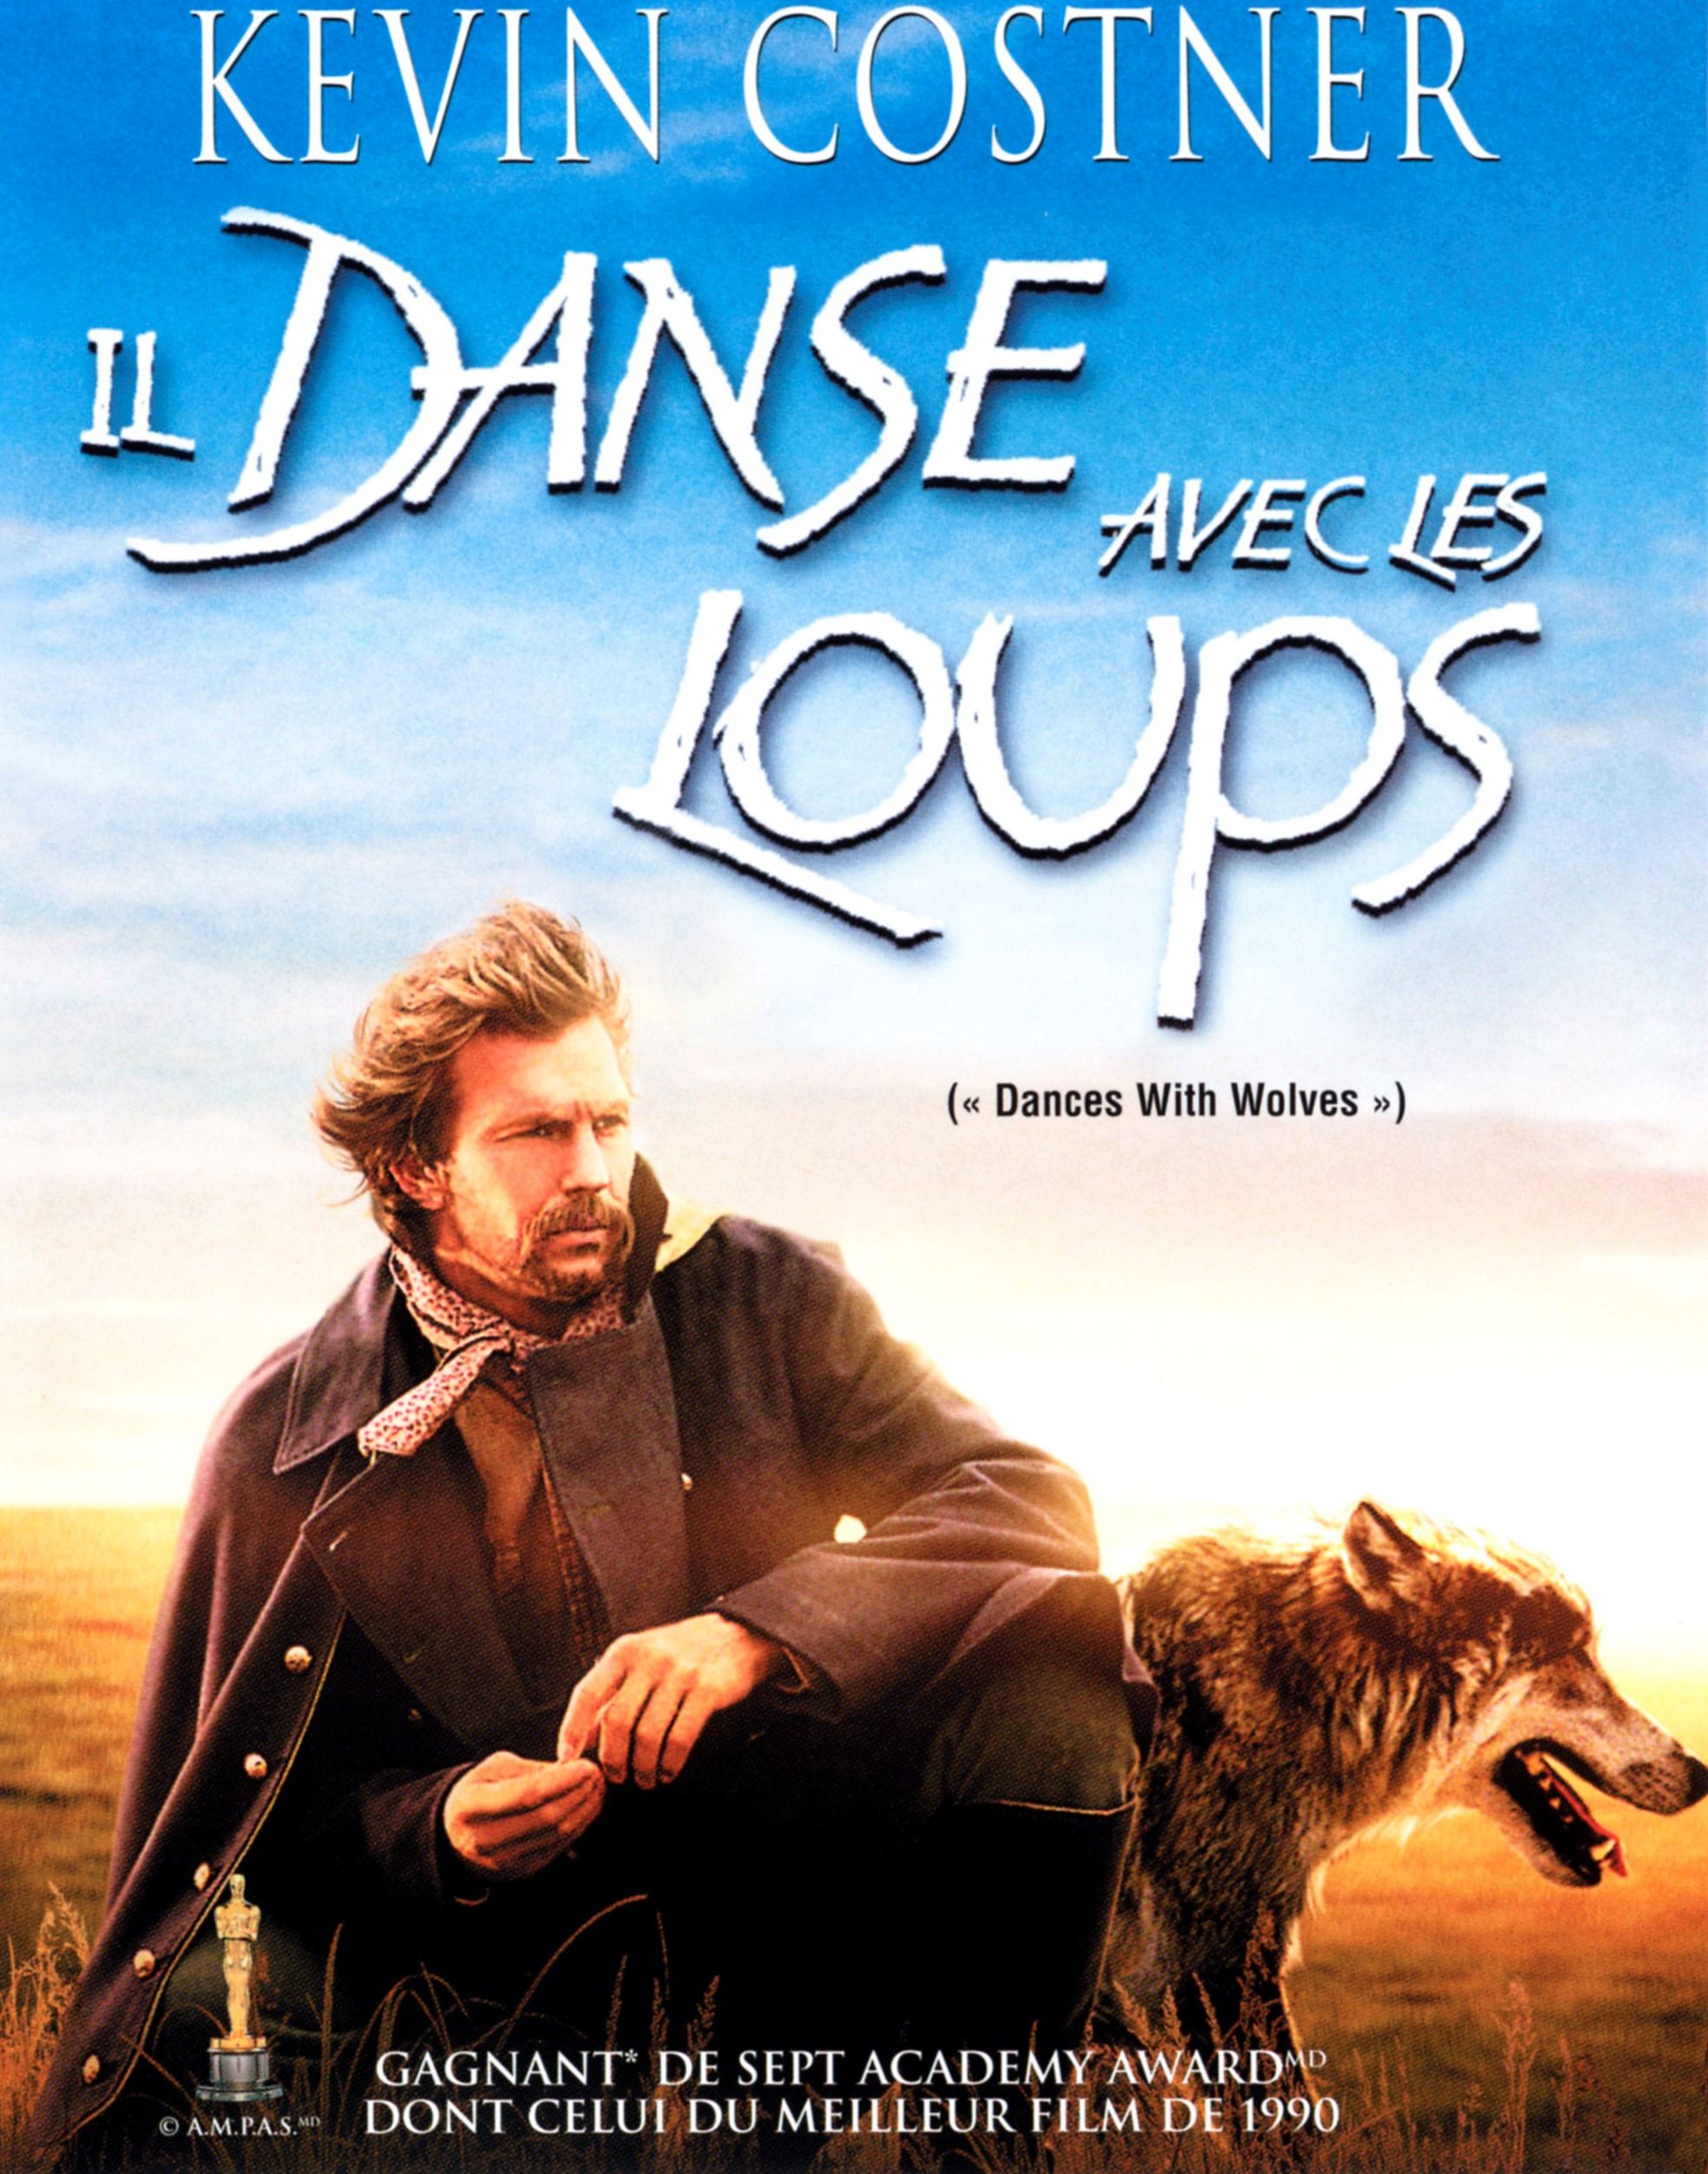 Danse avec les loups #kevincostner #danceaveclesloups #cinema #film #d